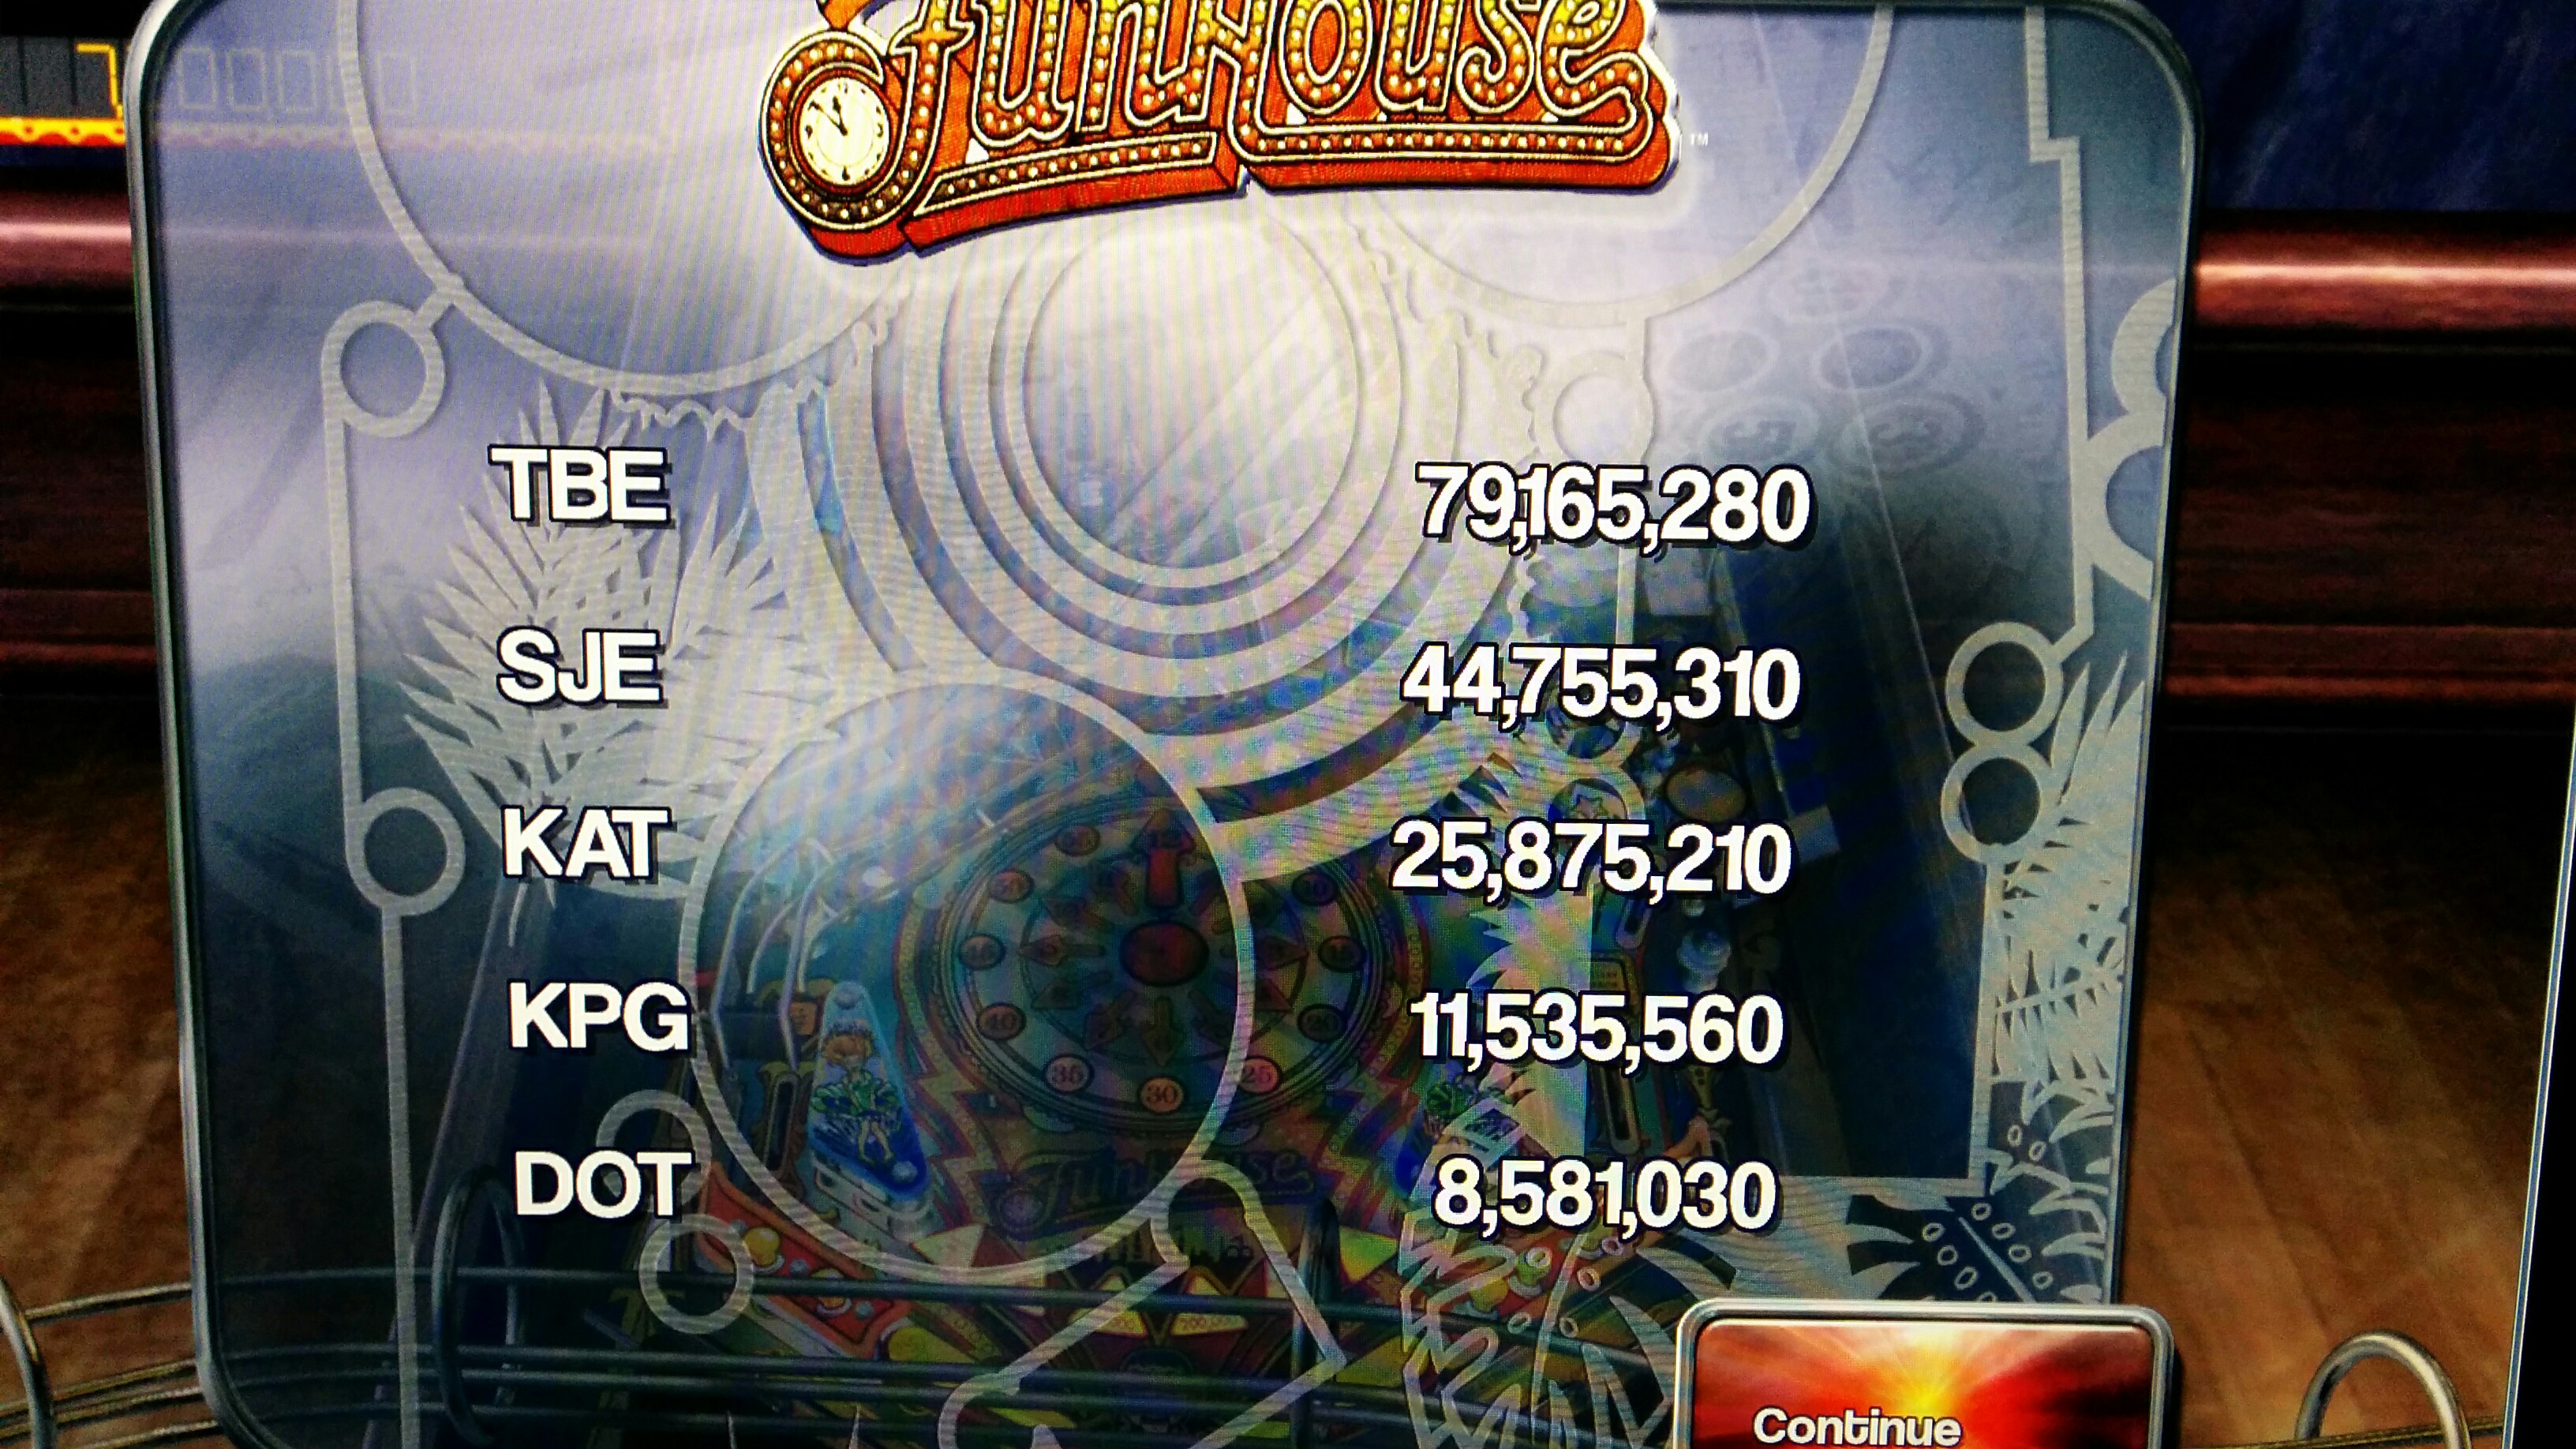 Sixx: Pinball Arcade: Funhouse (PC) 79,165,280 points on 2015-02-16 09:23:36